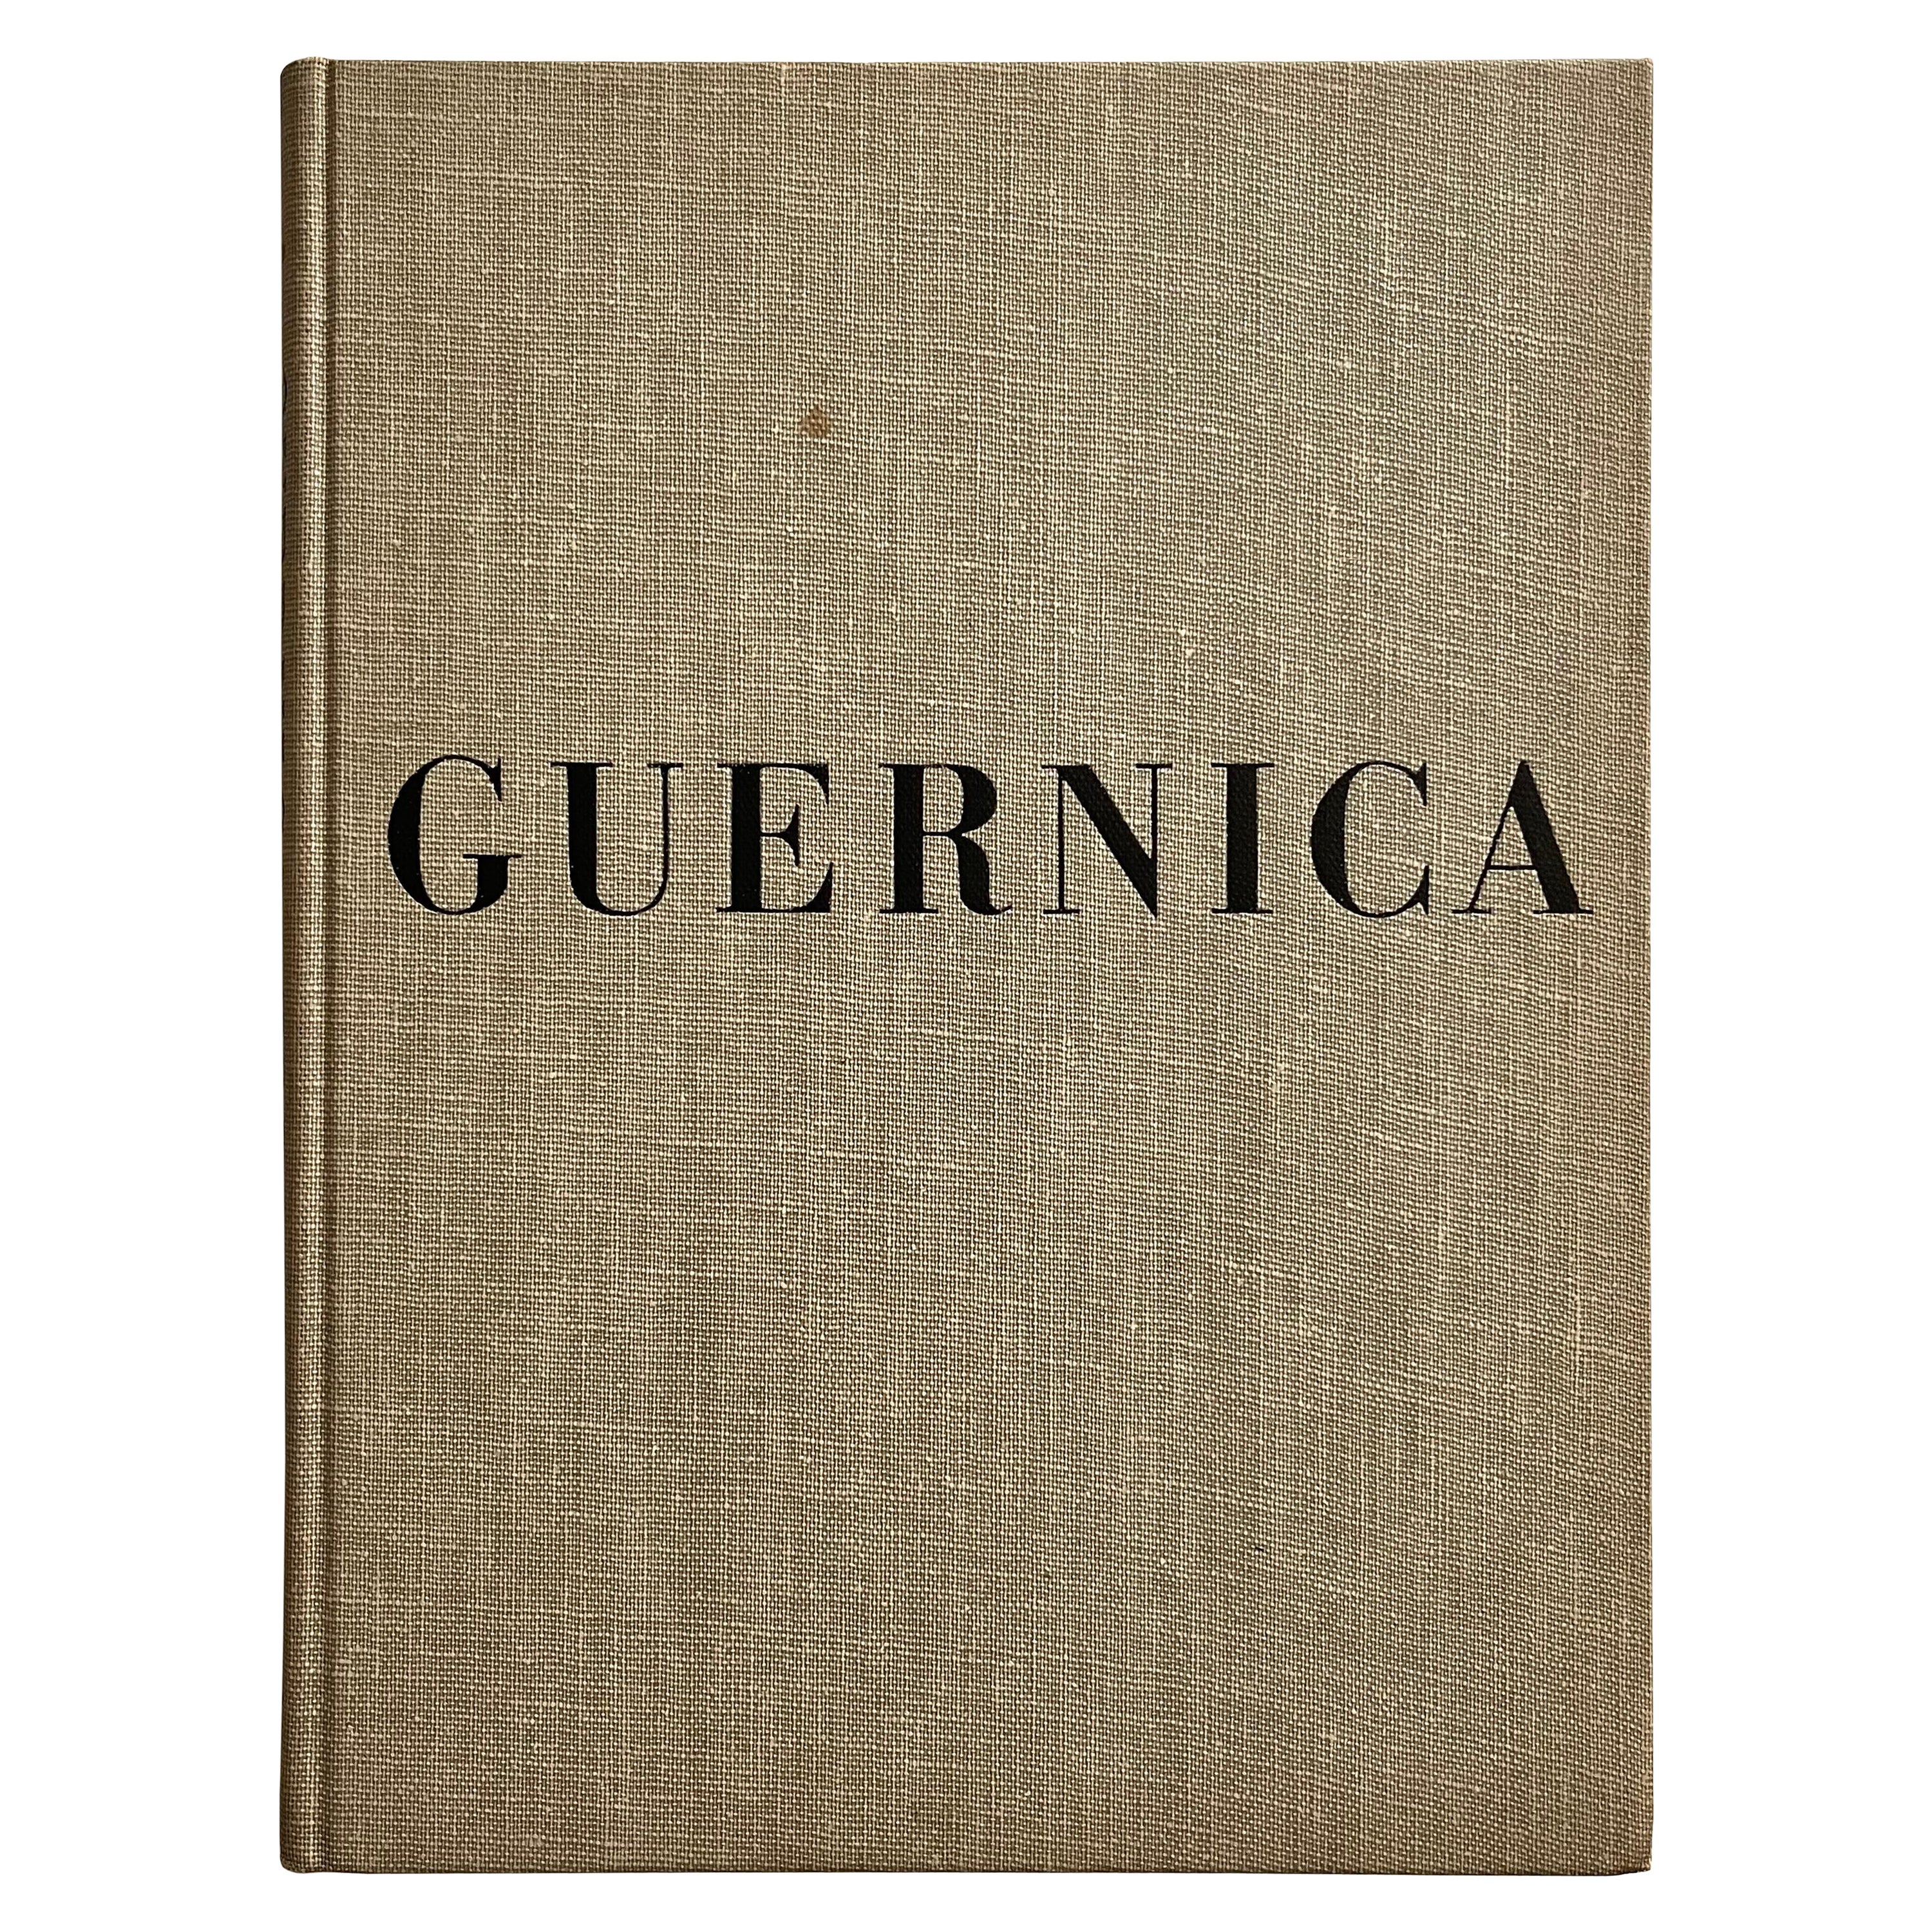 Guernica Pablo Picasso 1st edition 1947